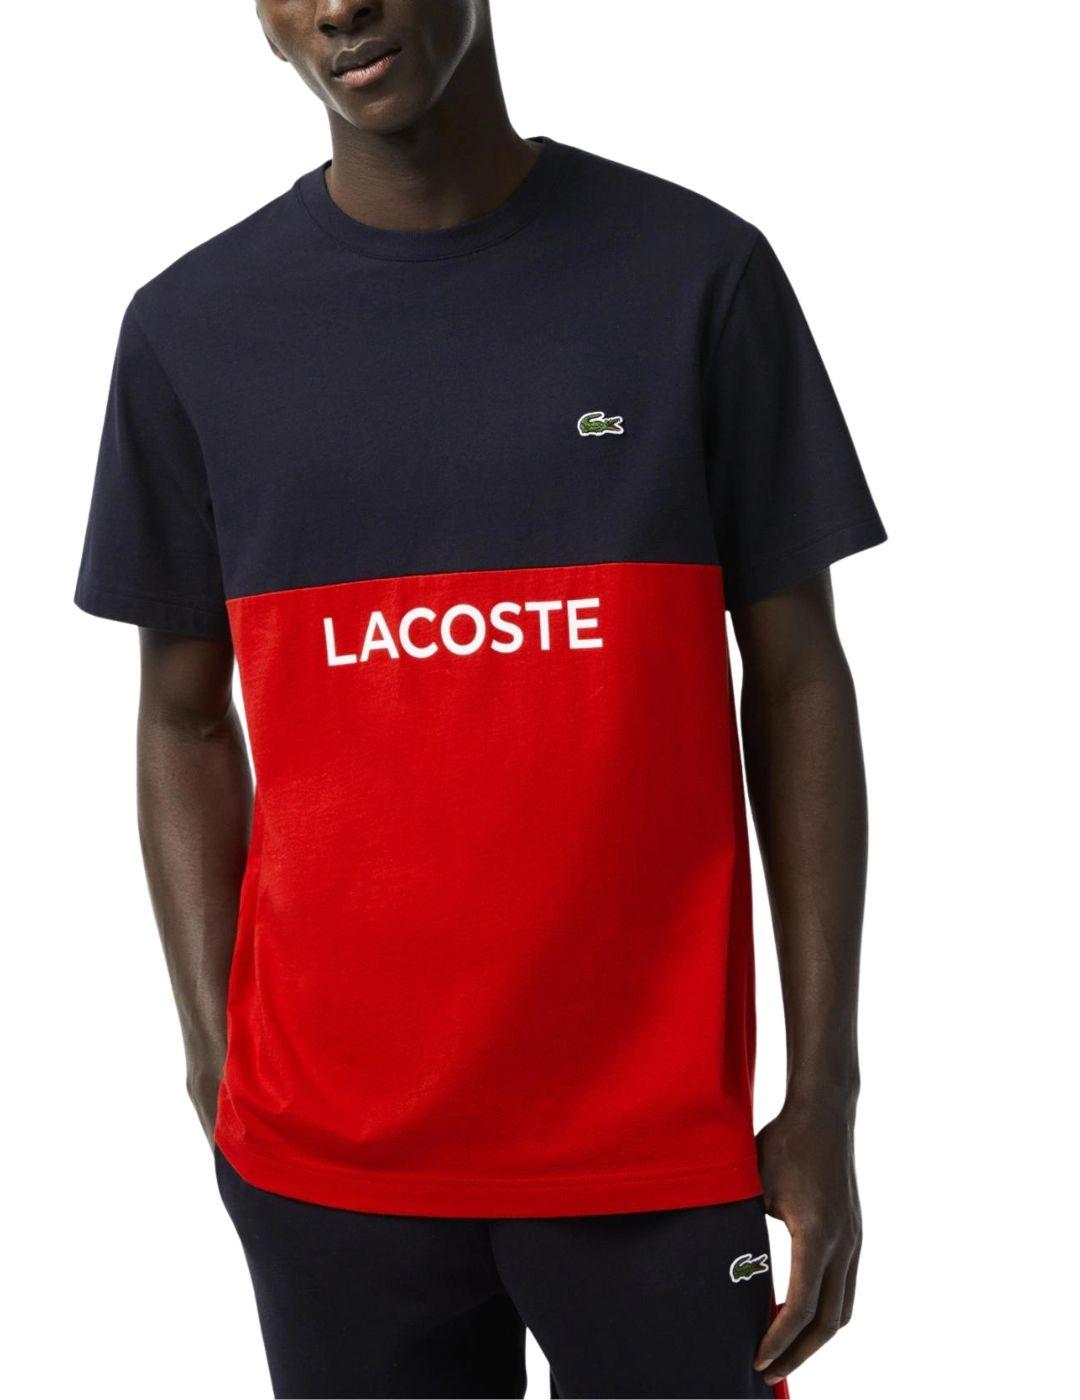 Camiseta de hombre Lacoste relaxed fit en algodón con detalles de